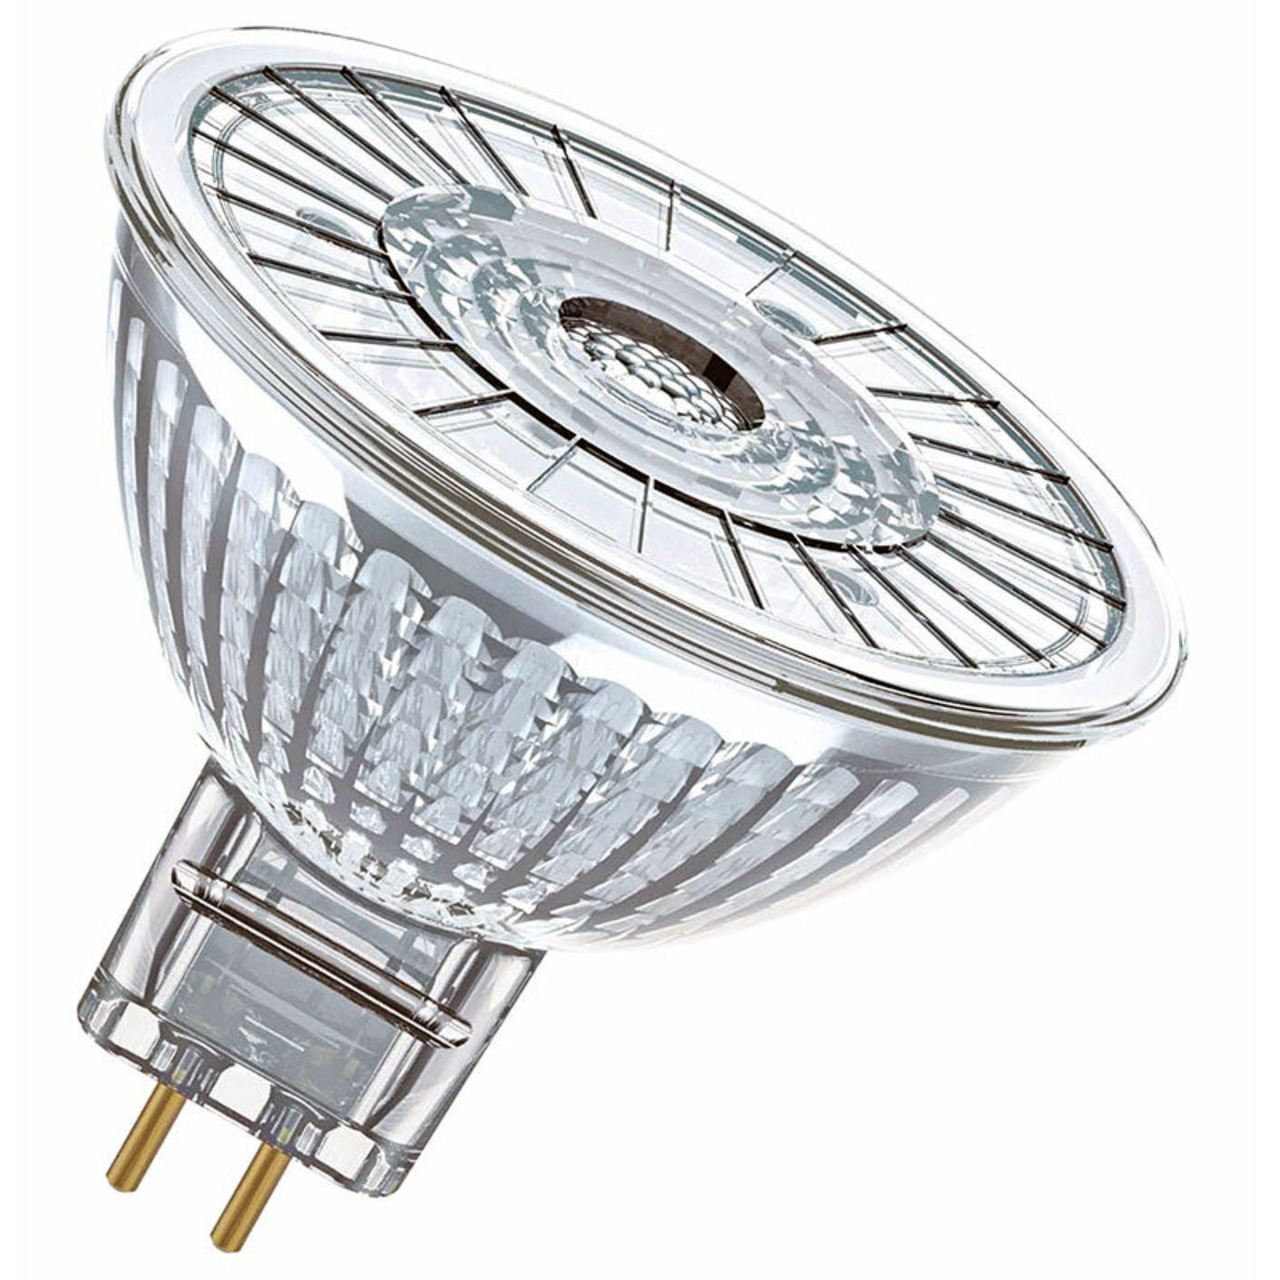 OSRAM LED SUPERSTAR 4-9-W-GU5-3-LED-Lampe- warmweiss- dimmbar- 12 V